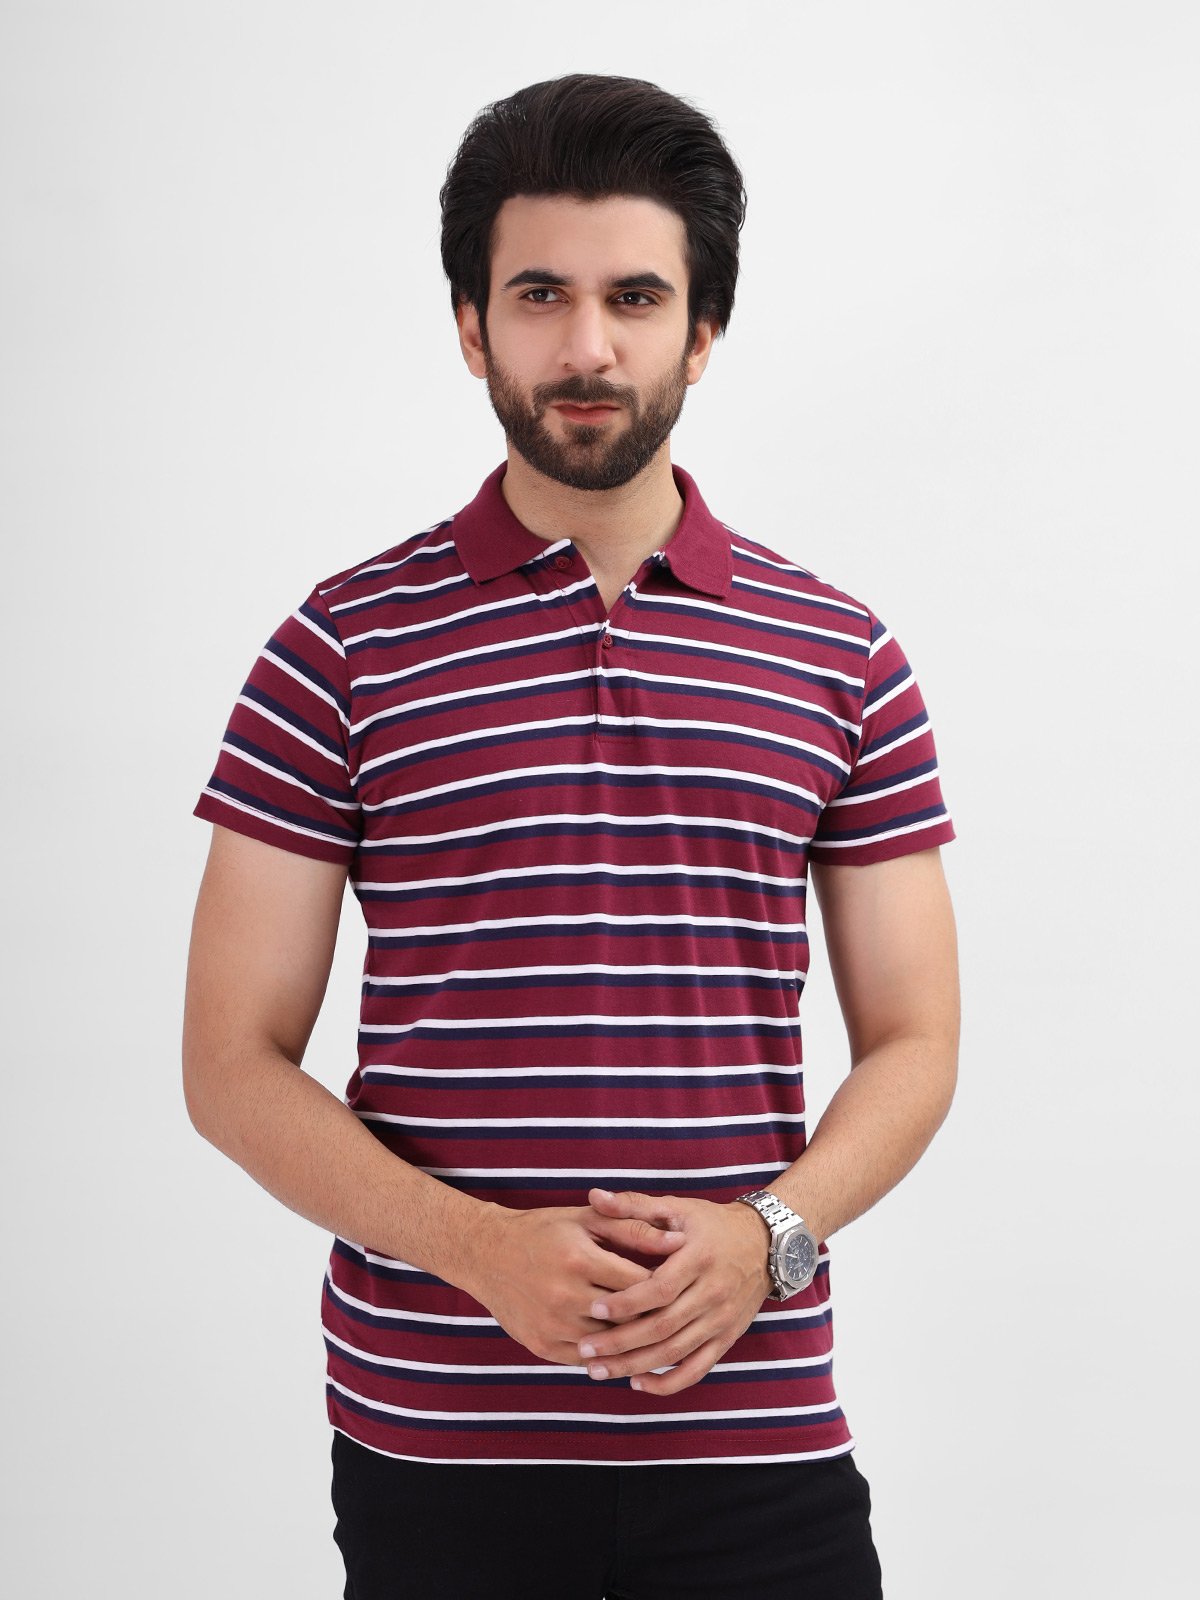 Men's Maroon Polo Shirt - EMTPS21-019